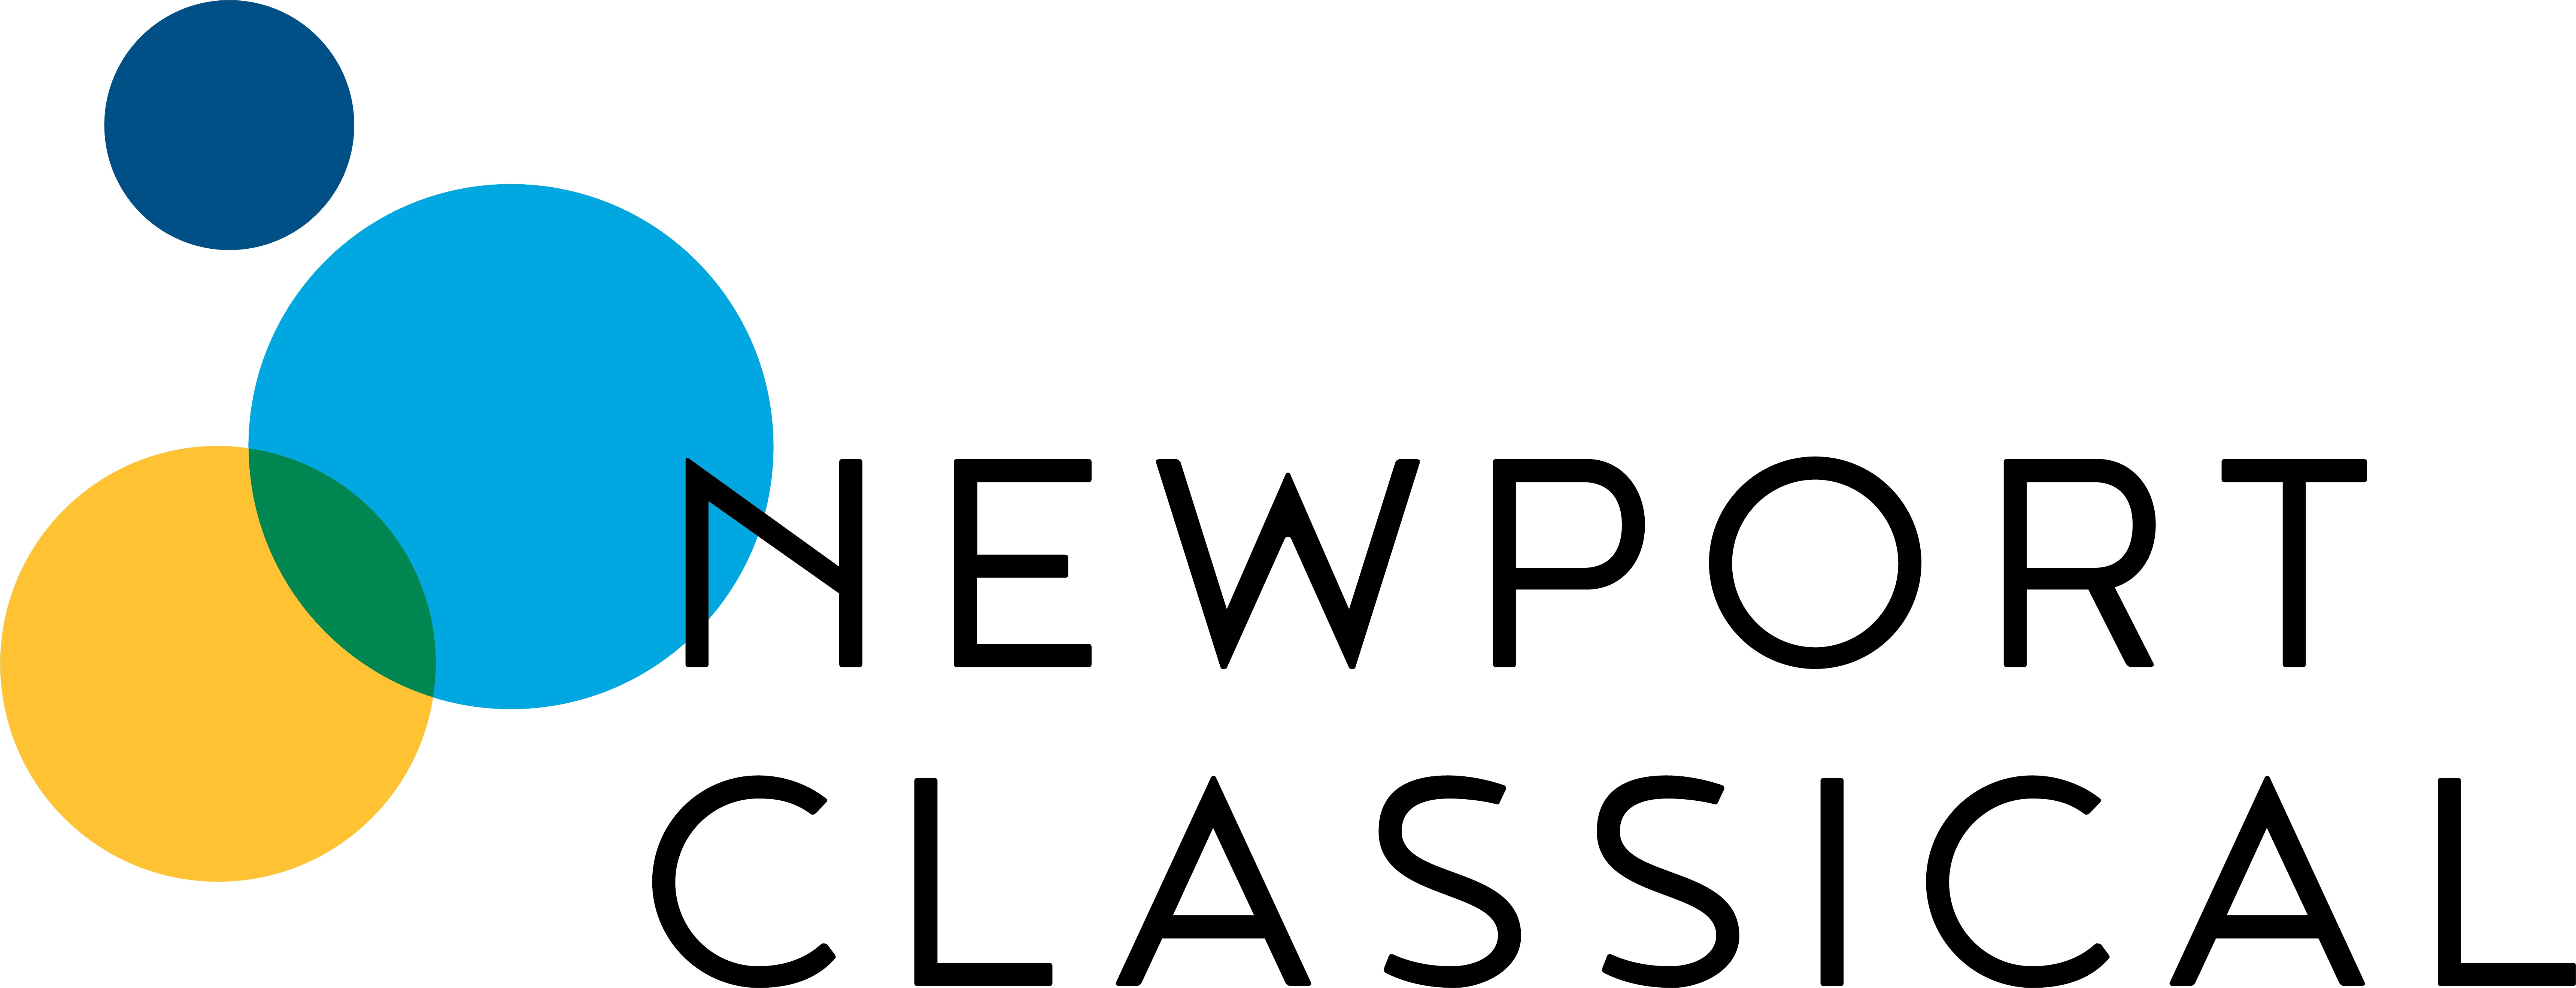 Newport Classical New Logo.jpg